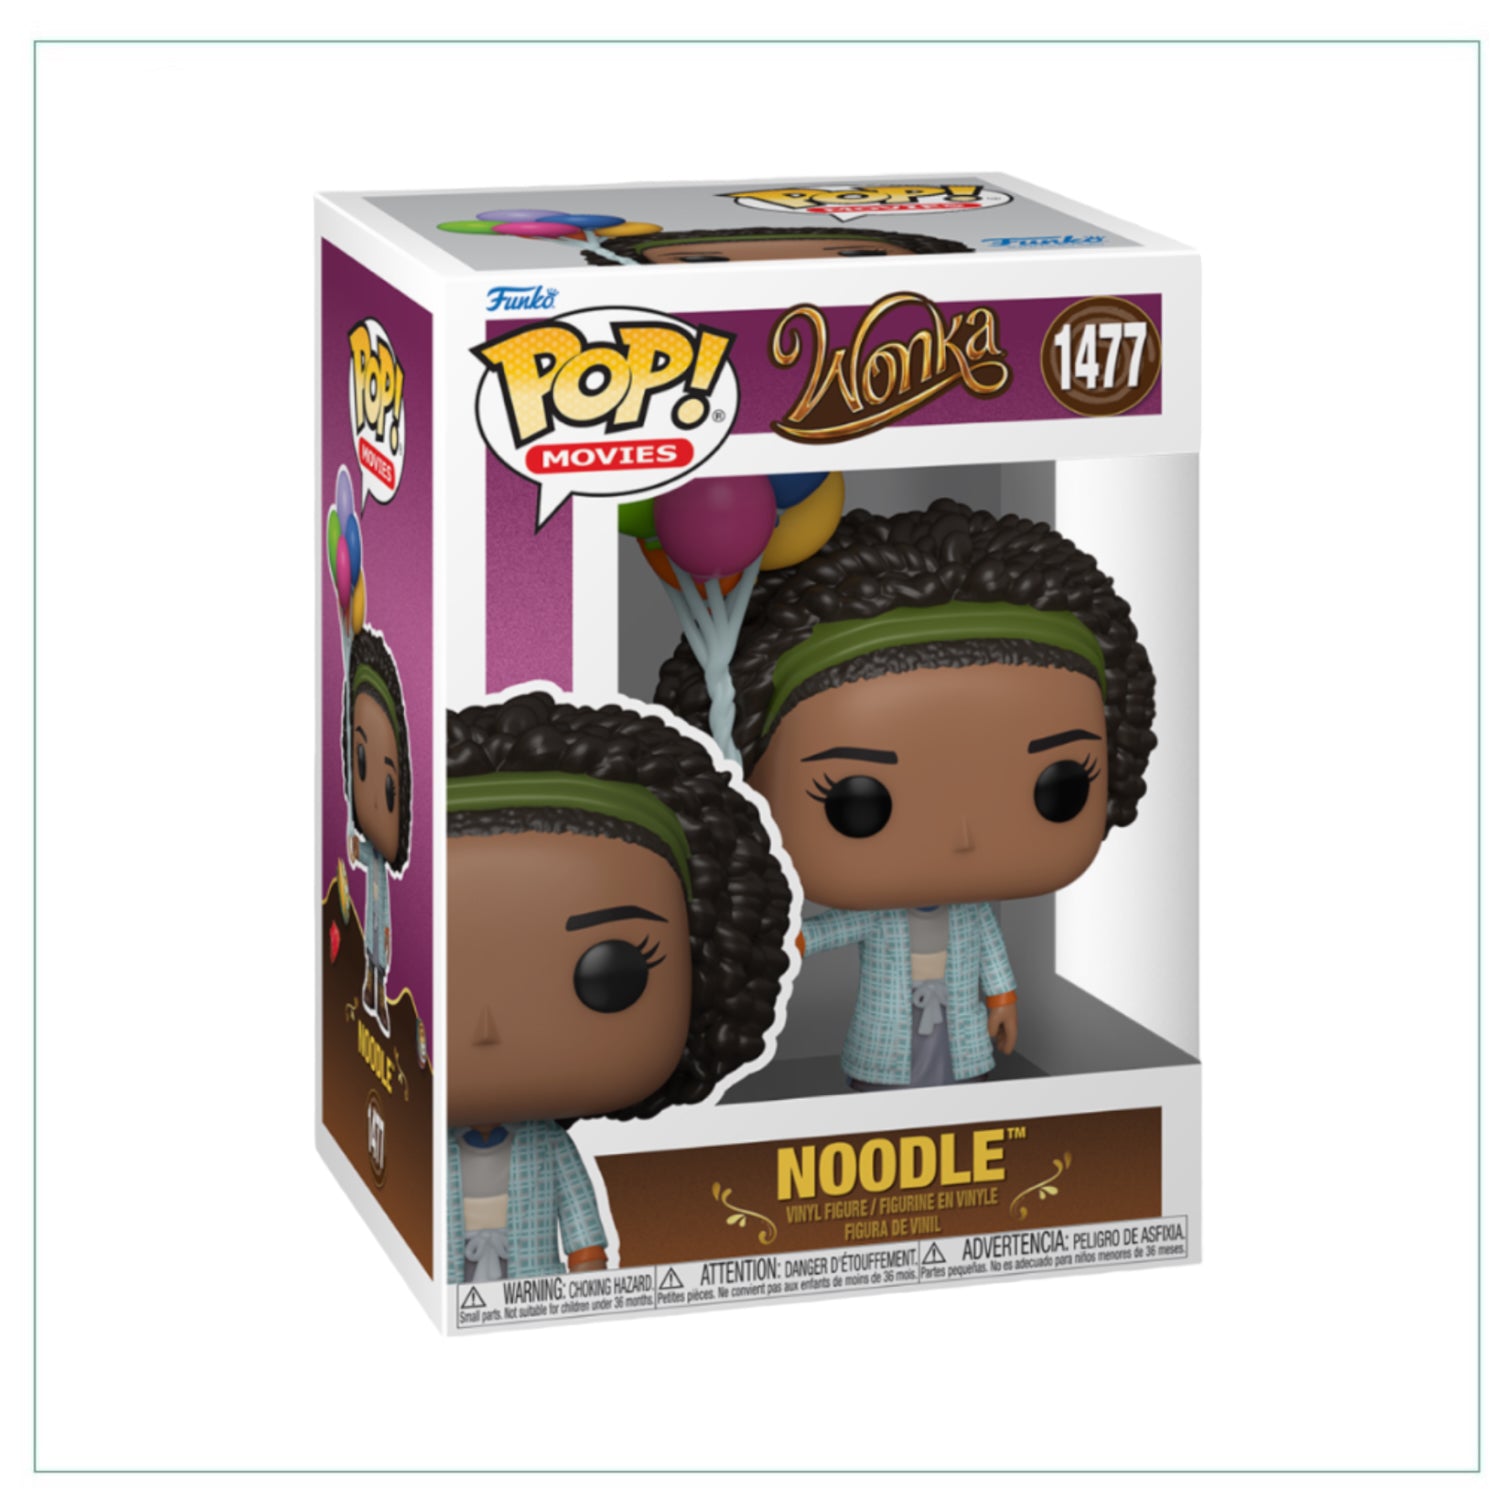 Noodle #1477 Funko Pop! Wonka